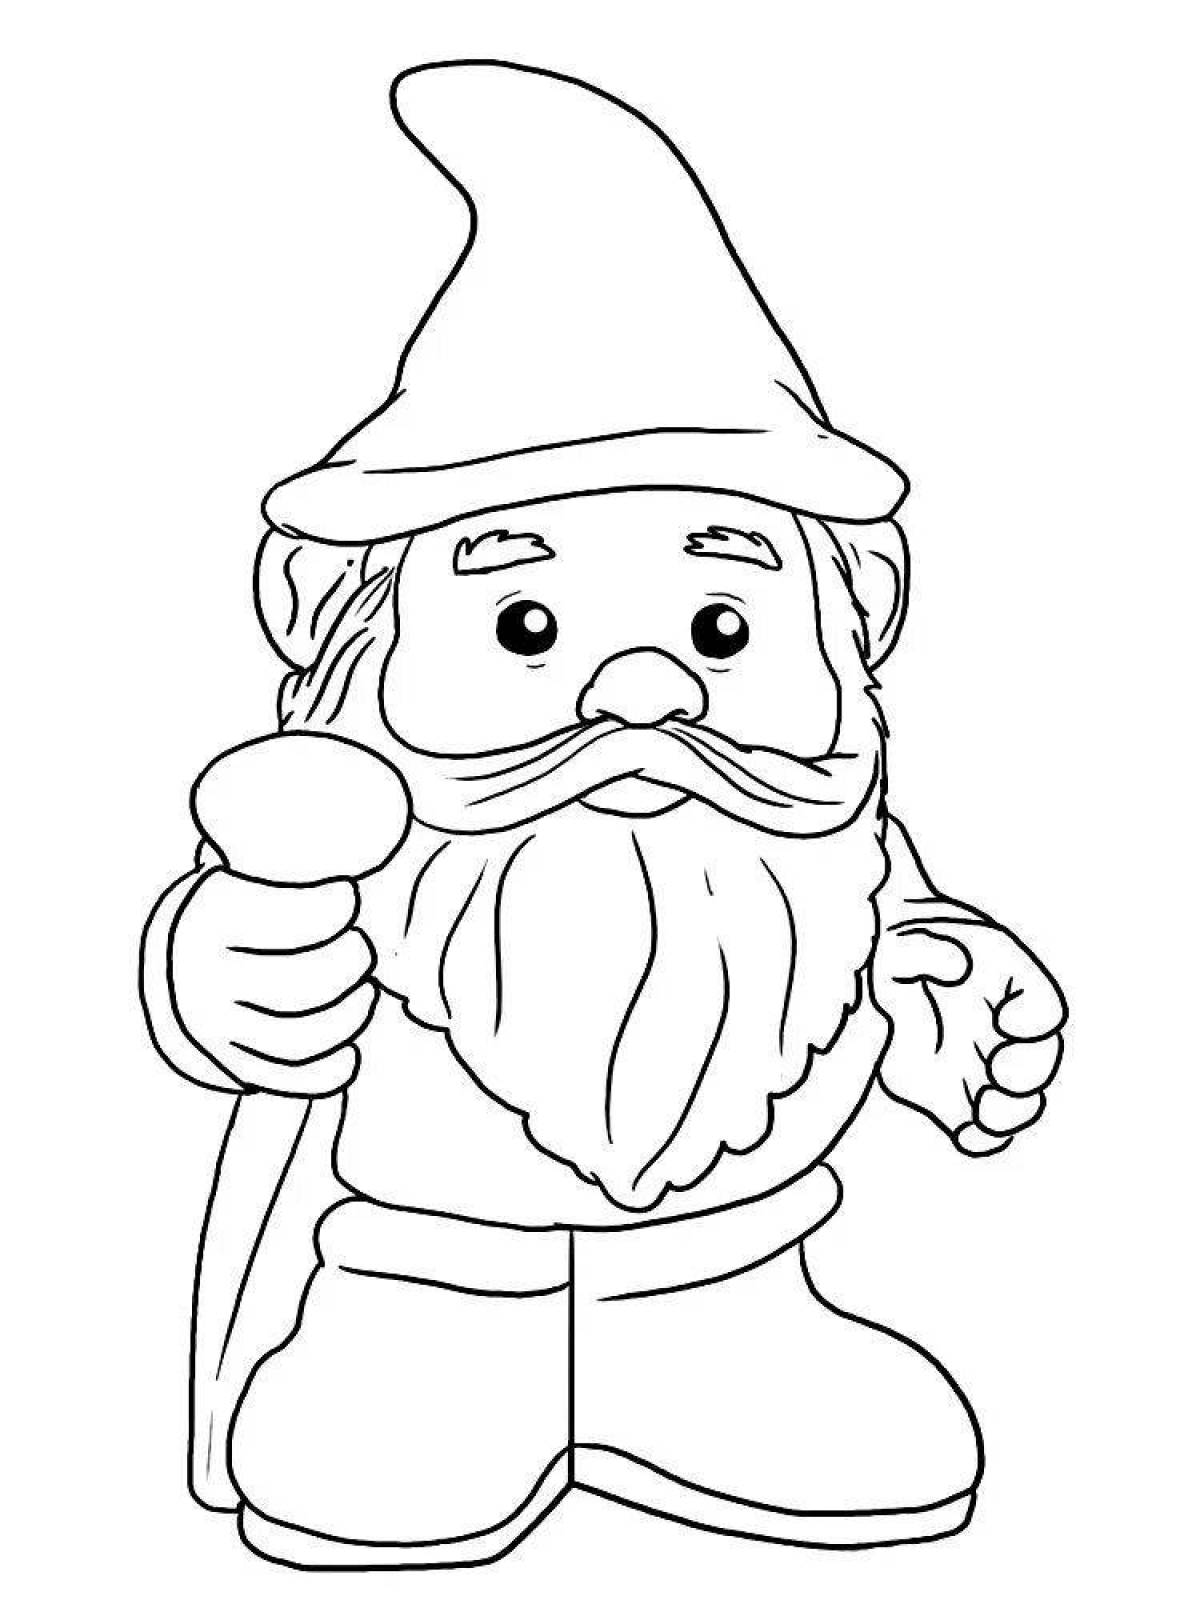 Fun coloring book gnome for kids